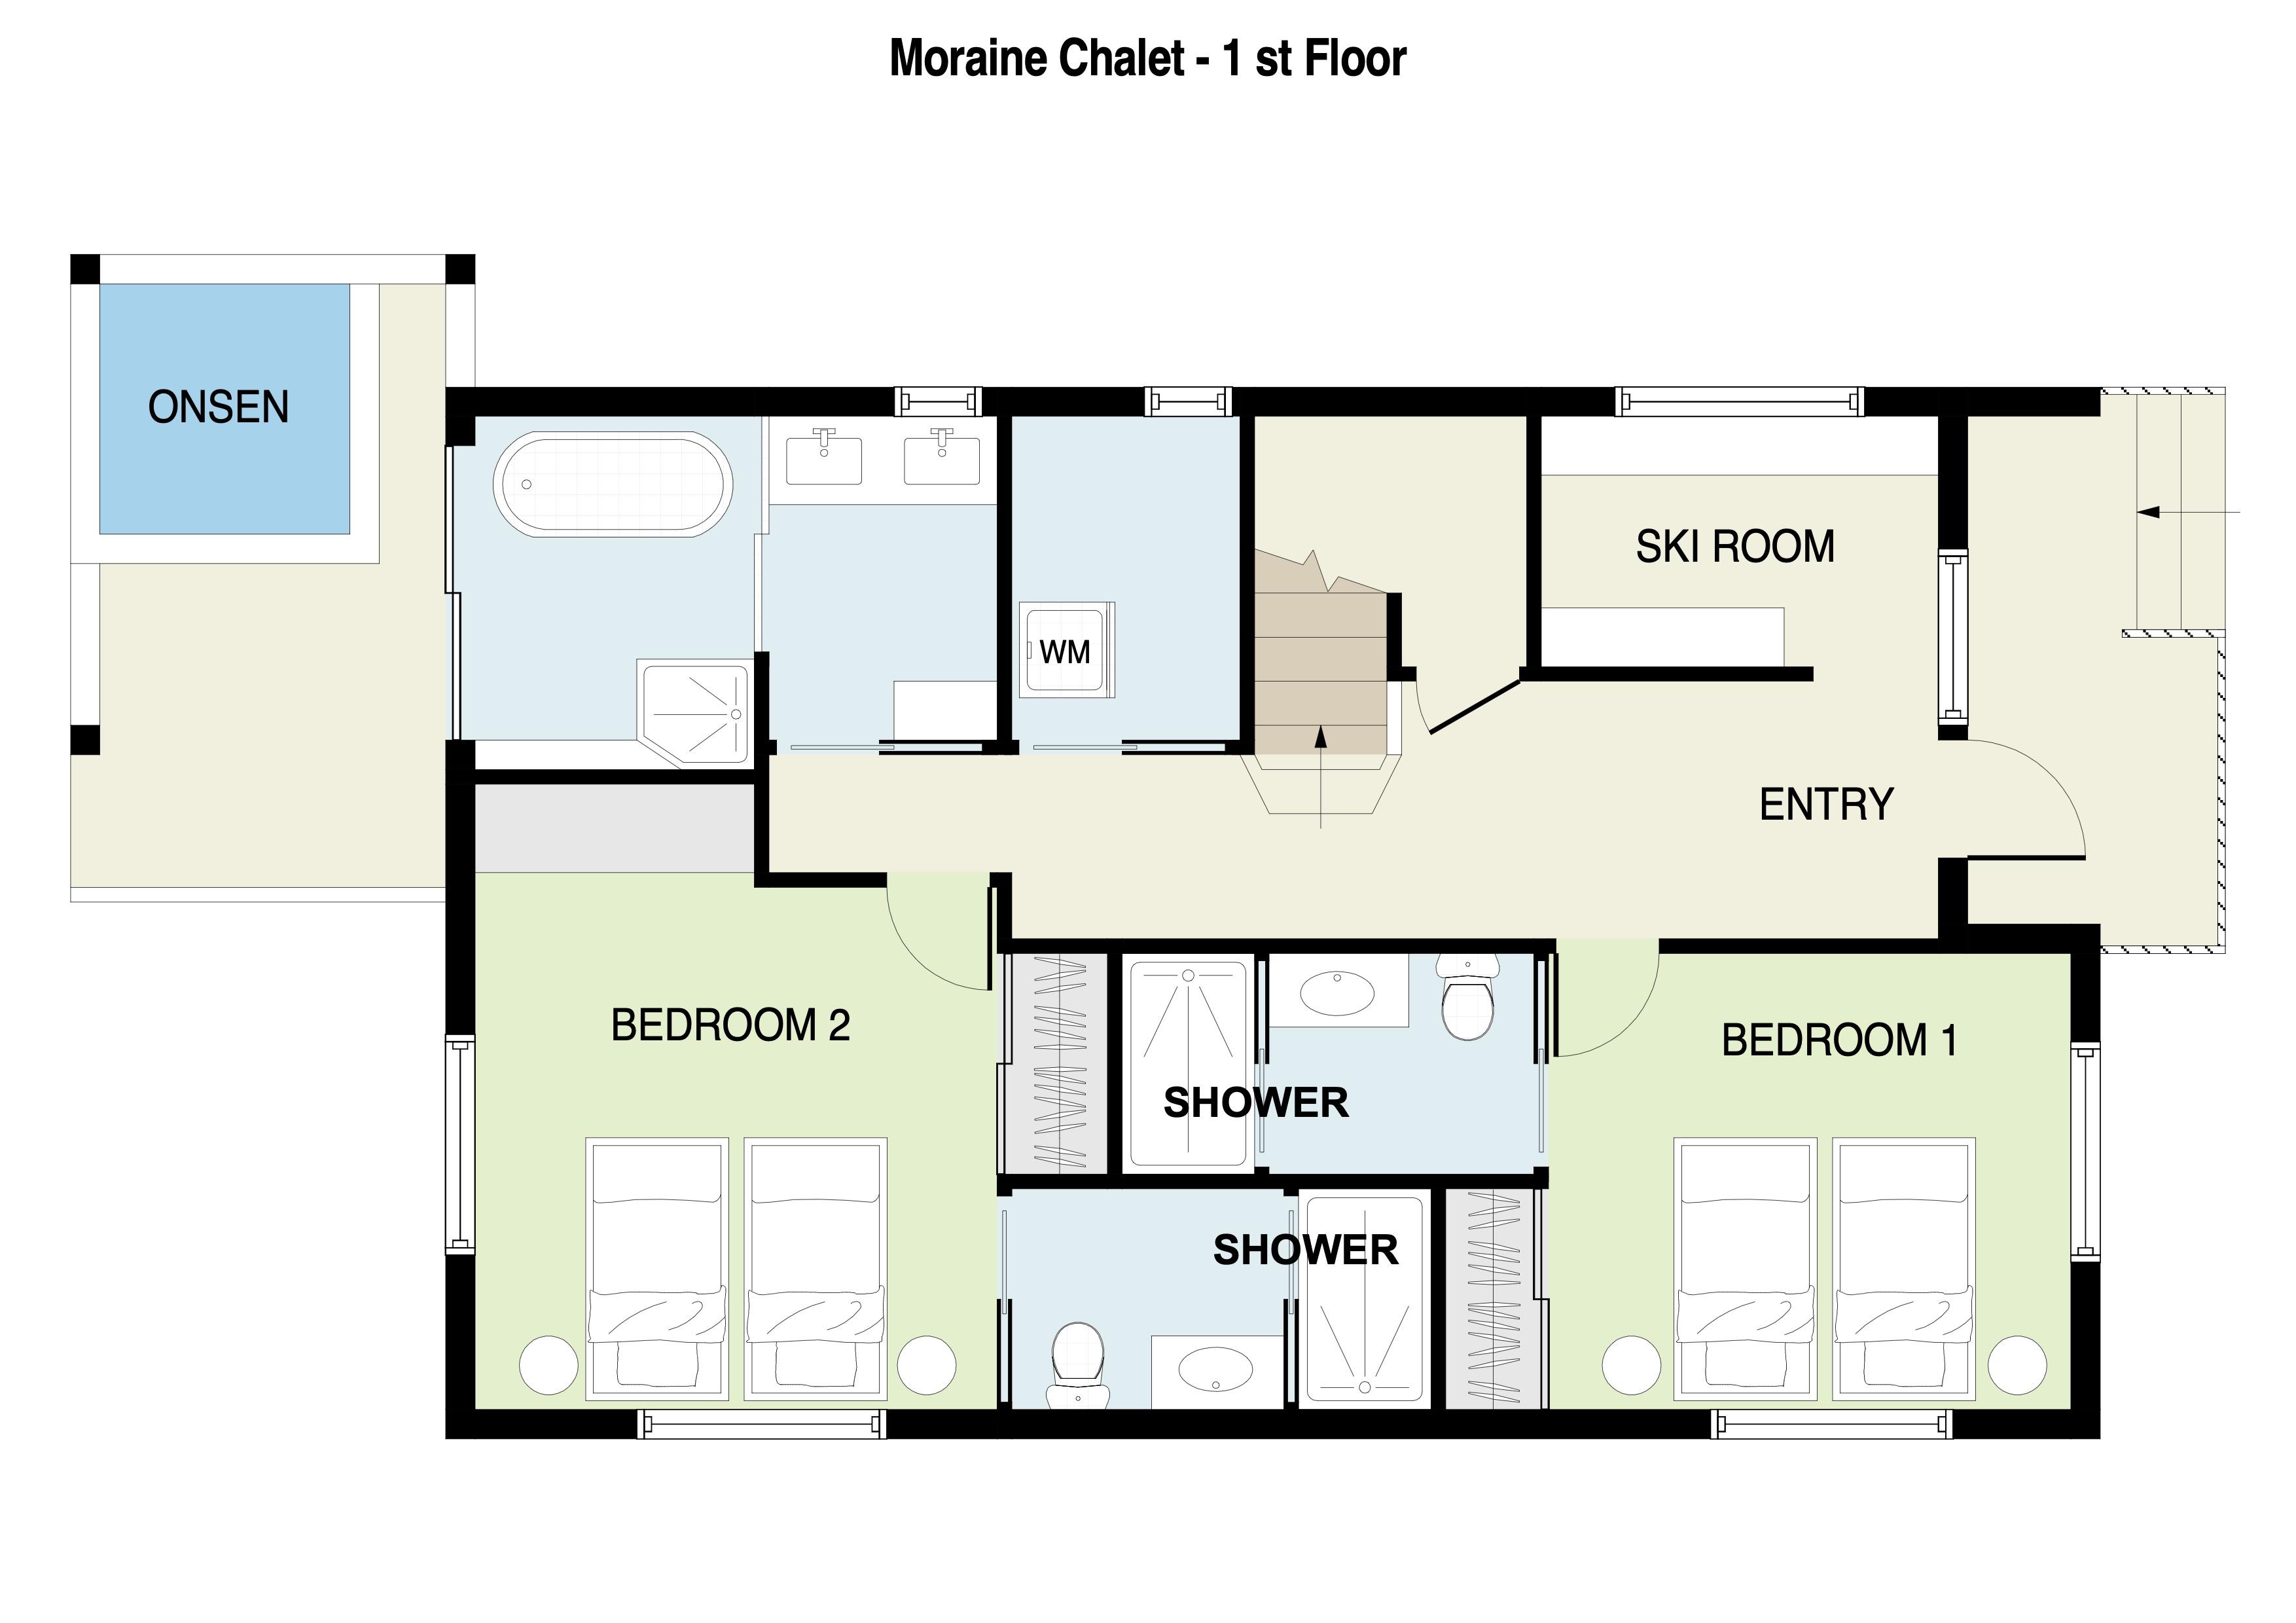 Moraine Chalet 1st Floor Plan